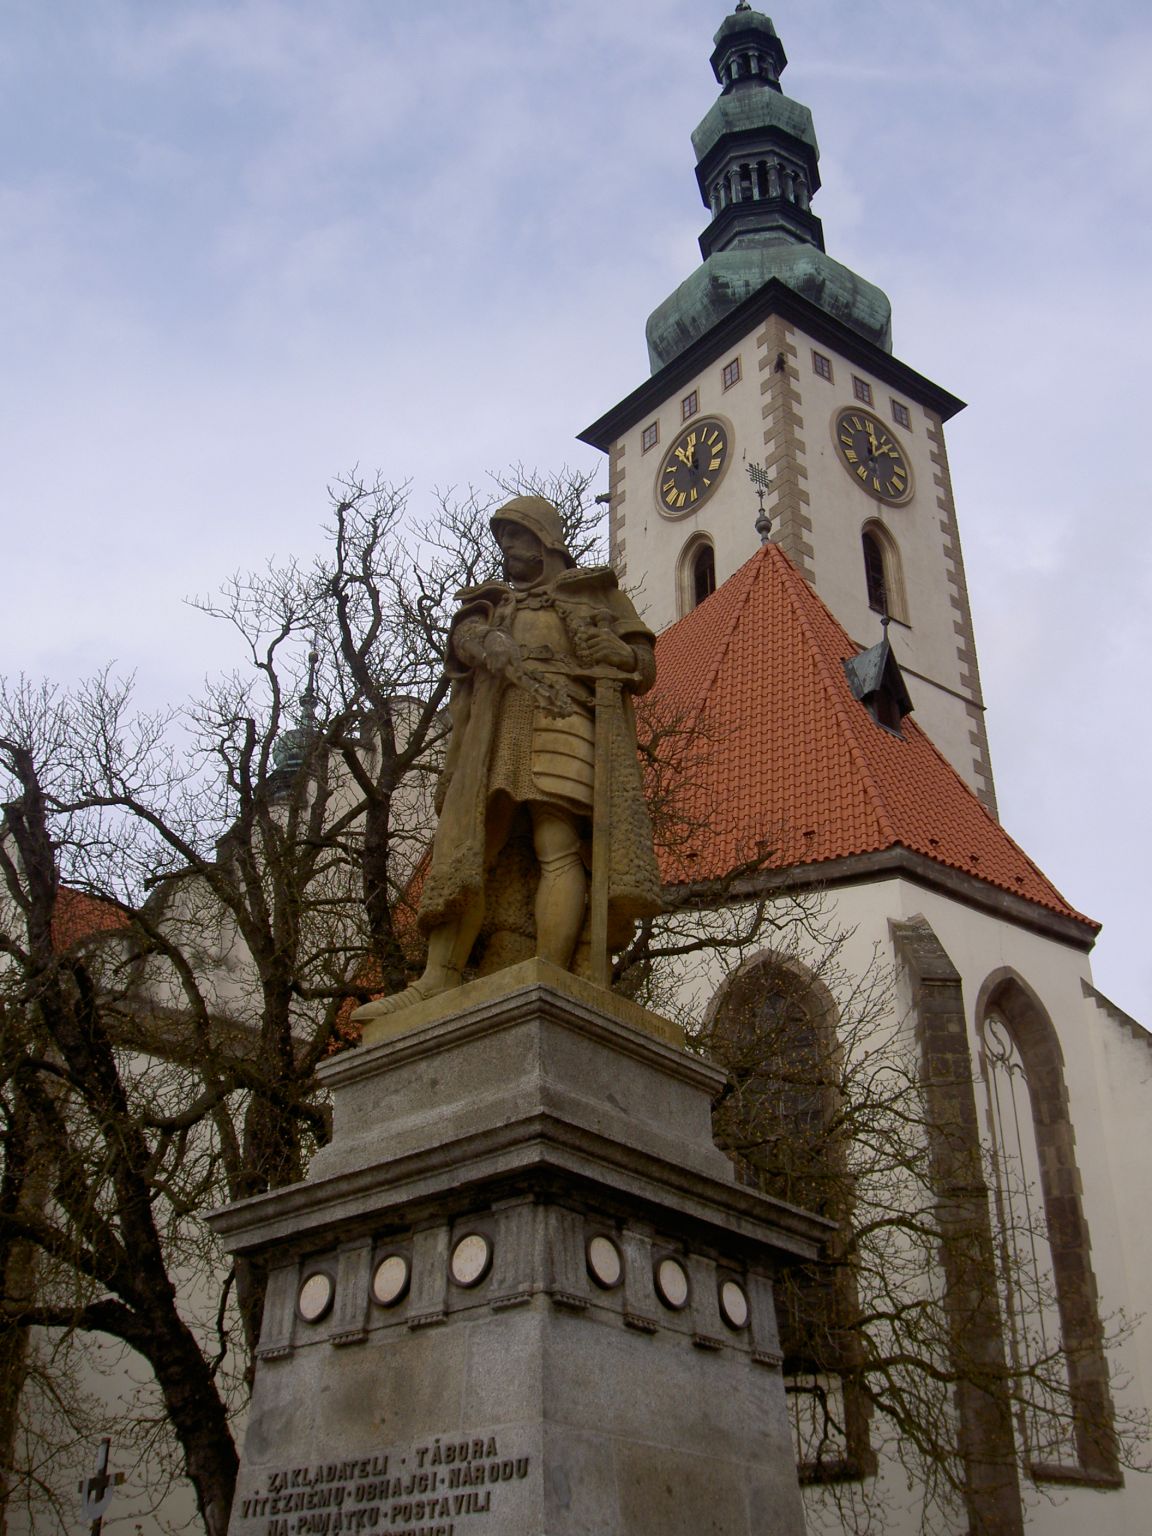 Tabor - Jan Hus